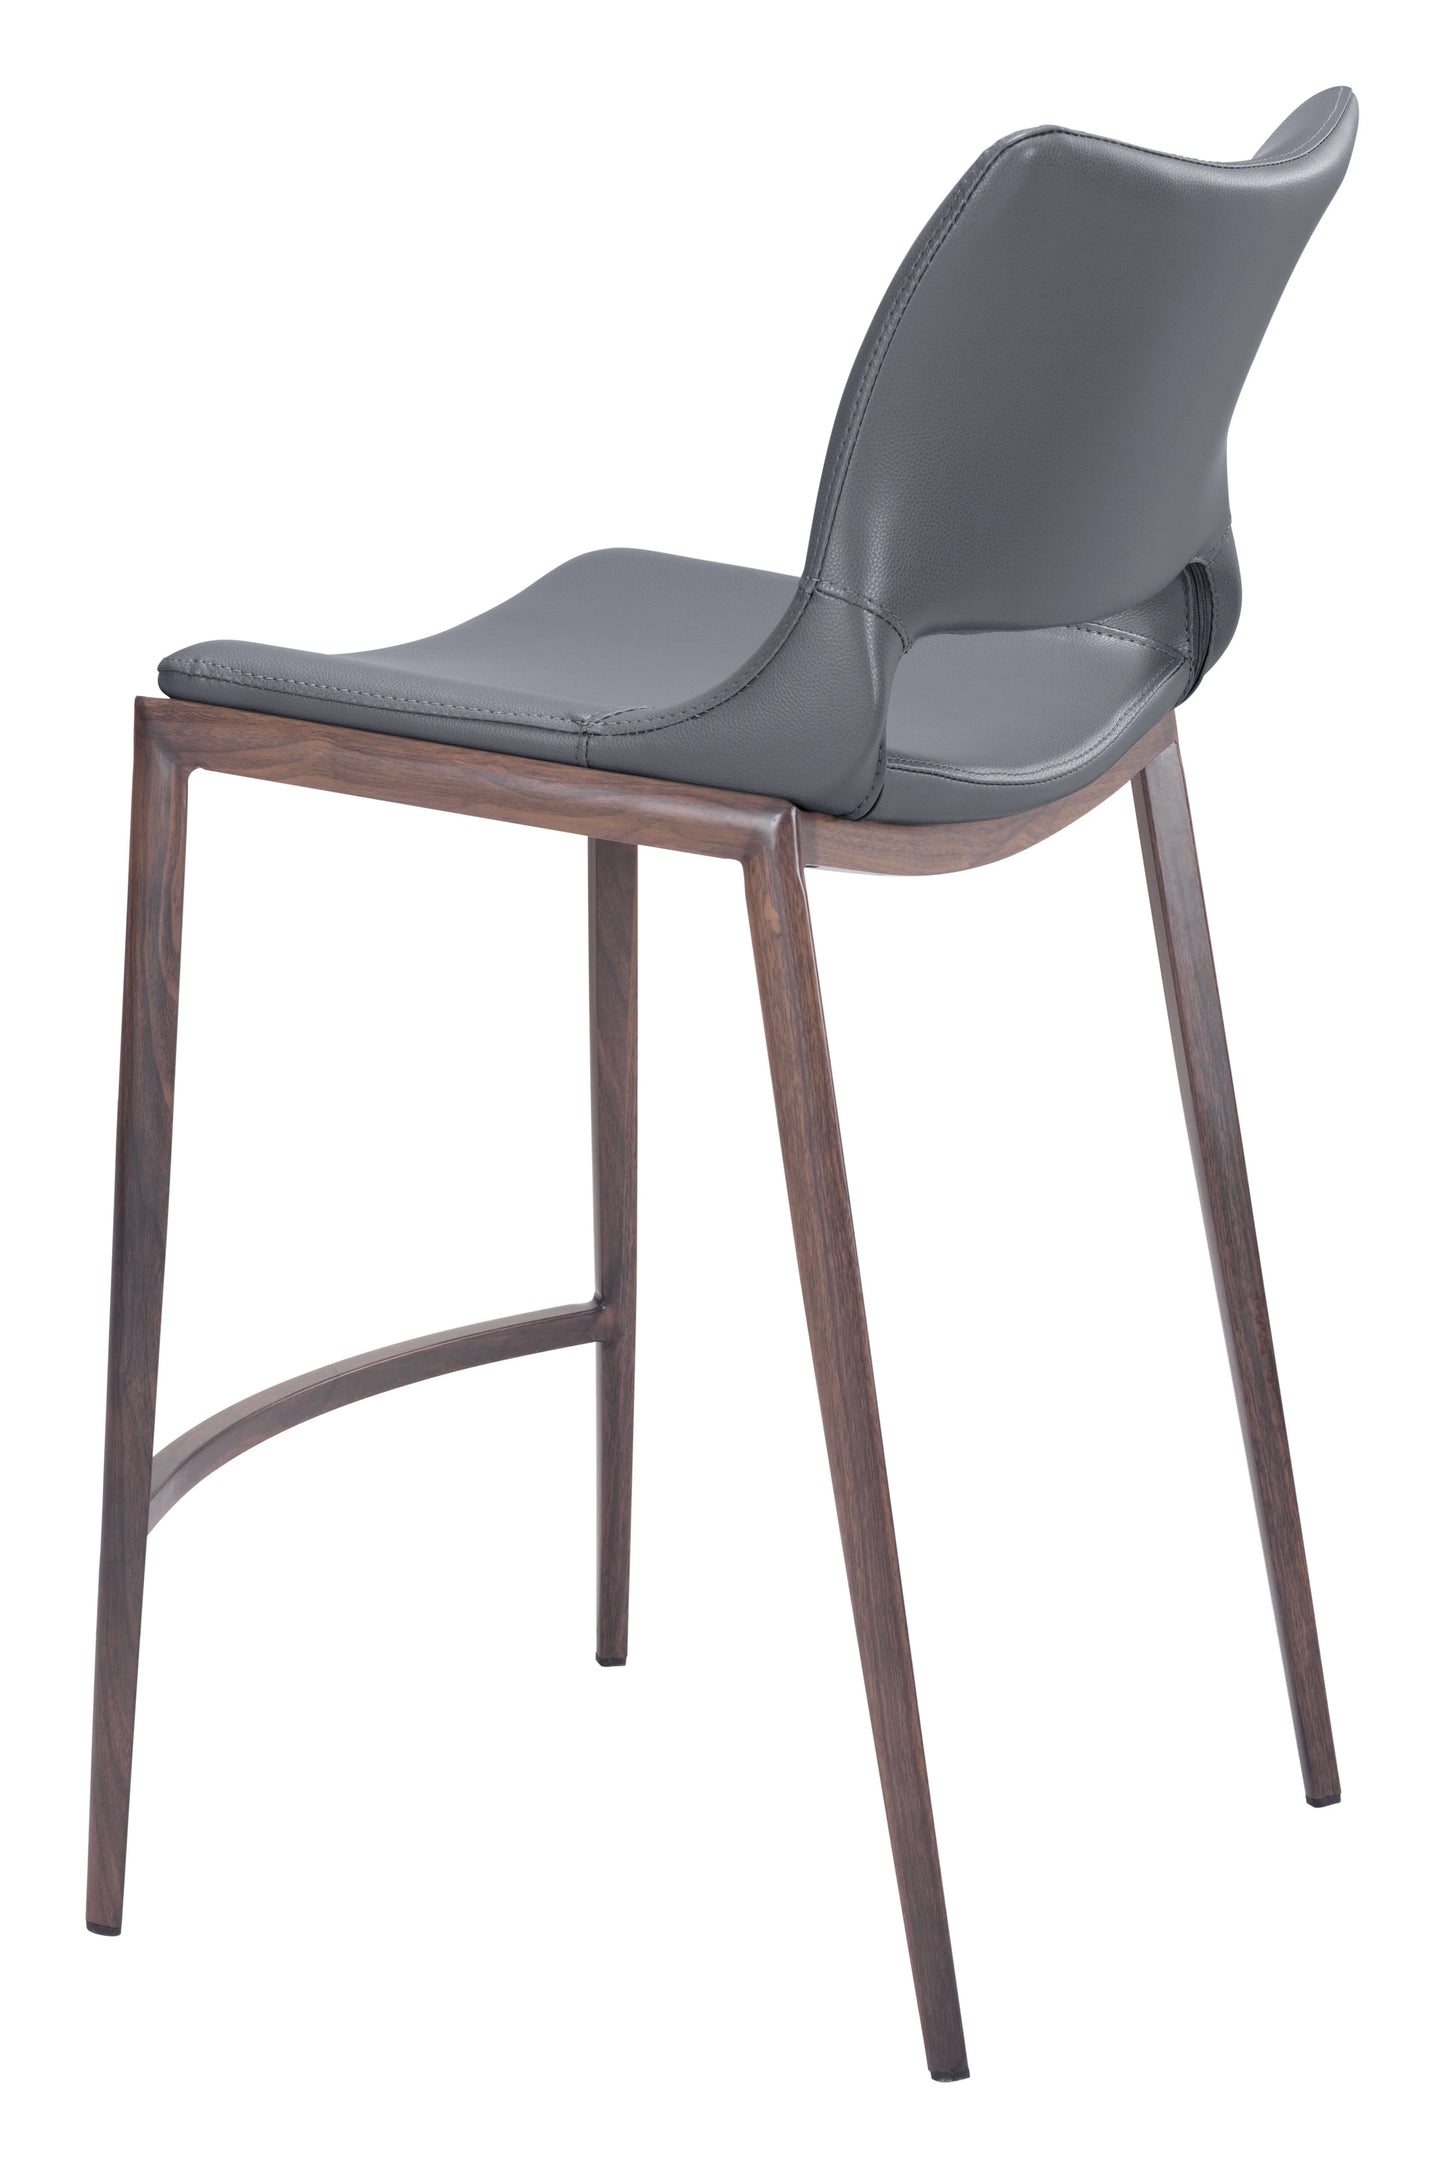 ergonomic counter stool